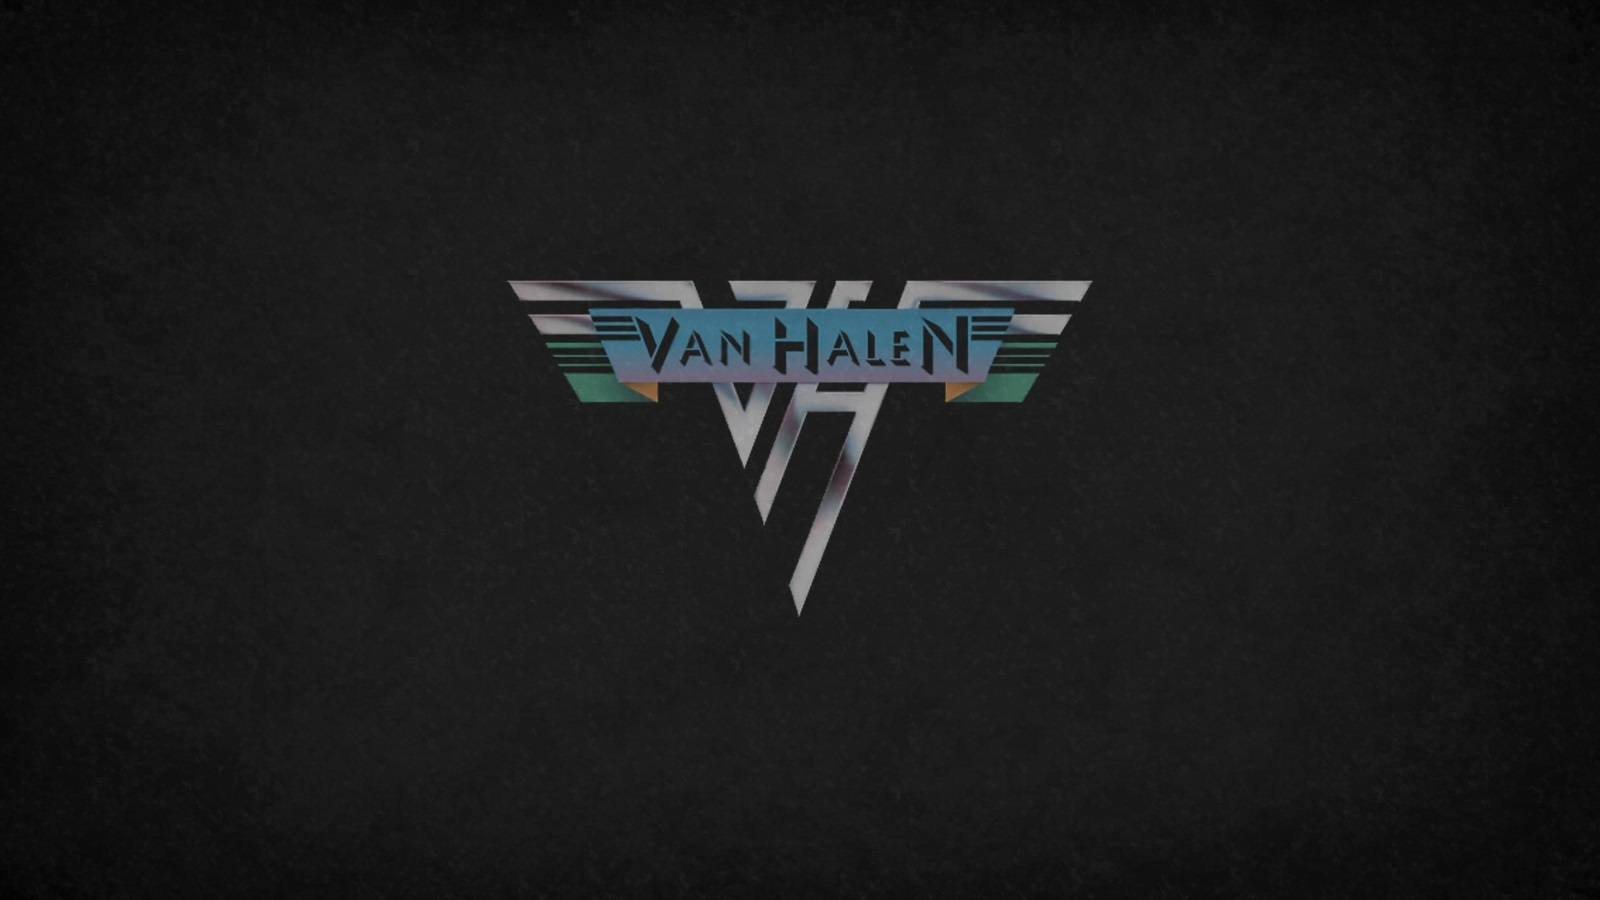 Vanhalen Rockband-logo Wallpaper